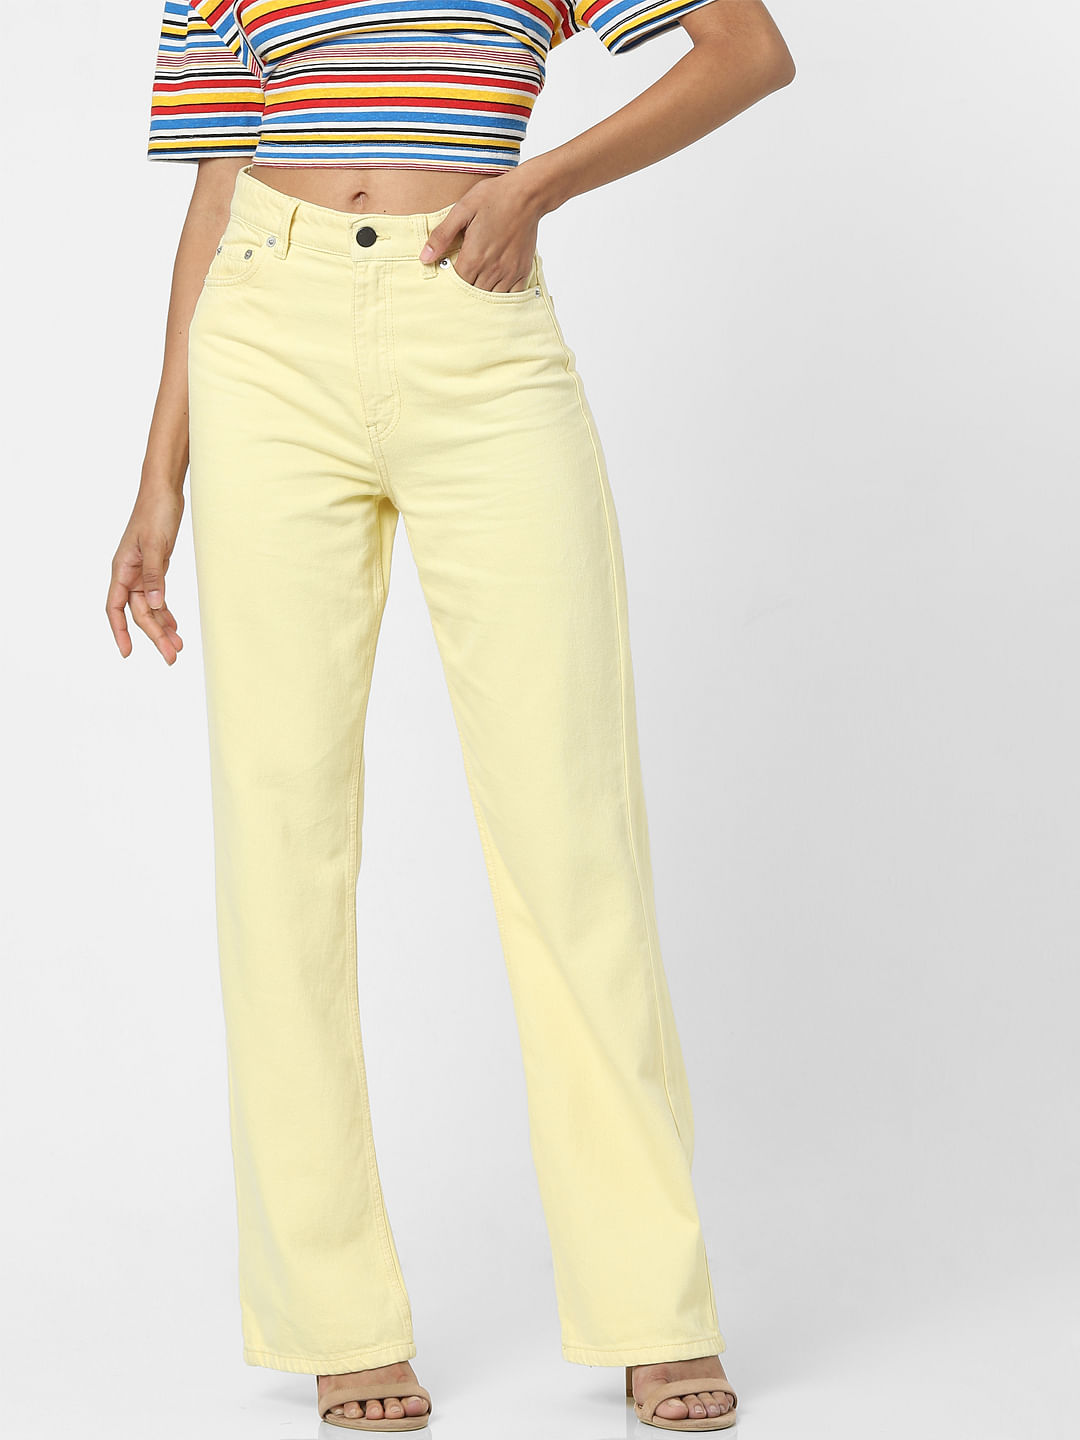 Select Light Yellow Solid Cotton Slub Pants | Jaipur Kurti – Nykaa Fashion